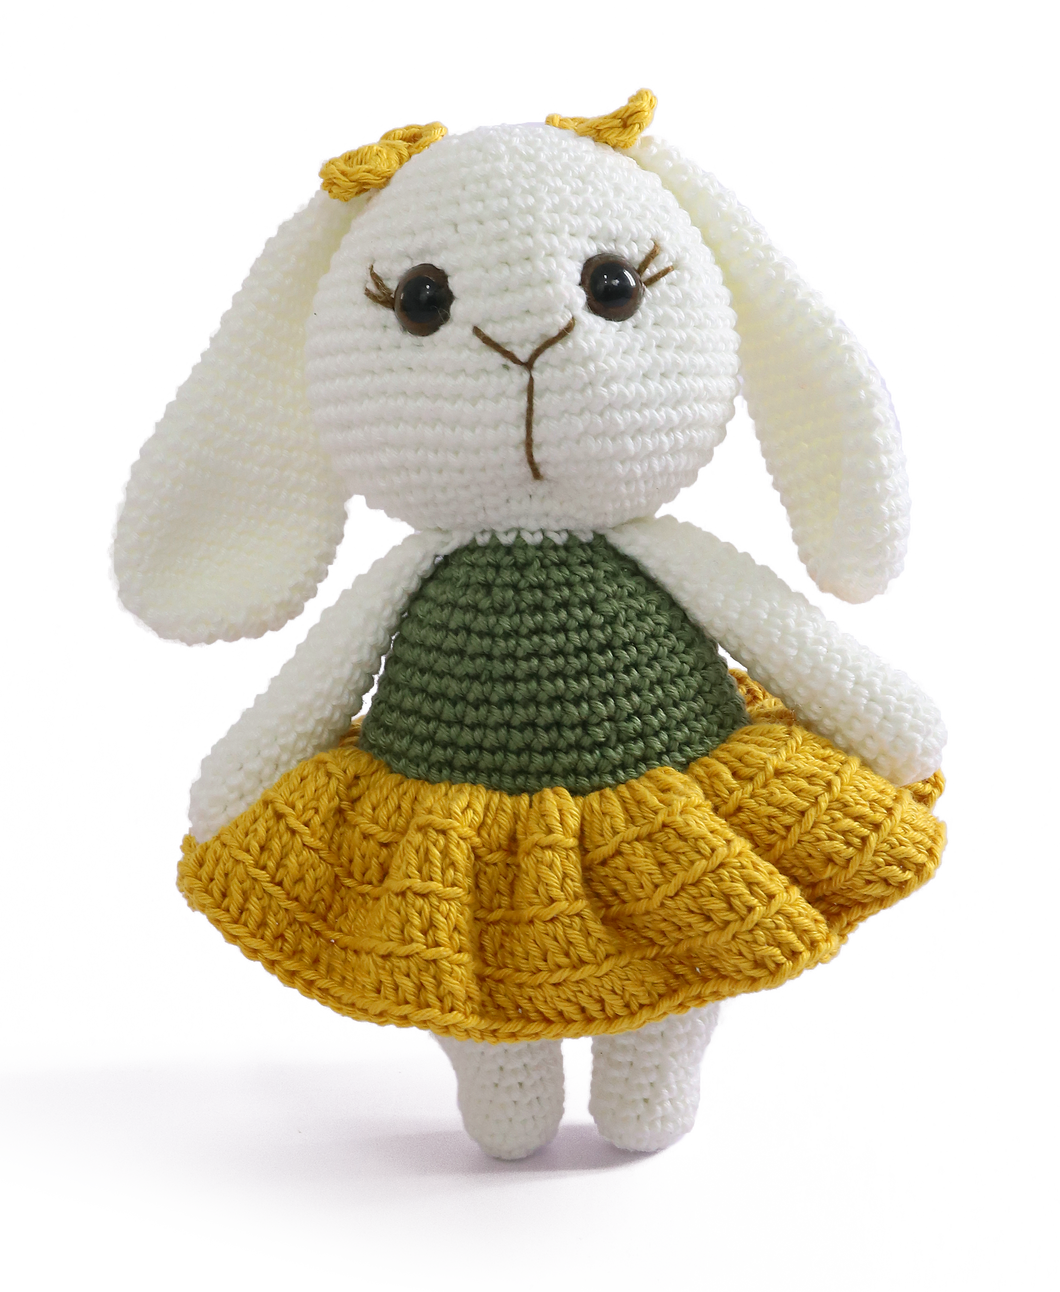 Crochet Amigurumi Animal Kits | Circulo